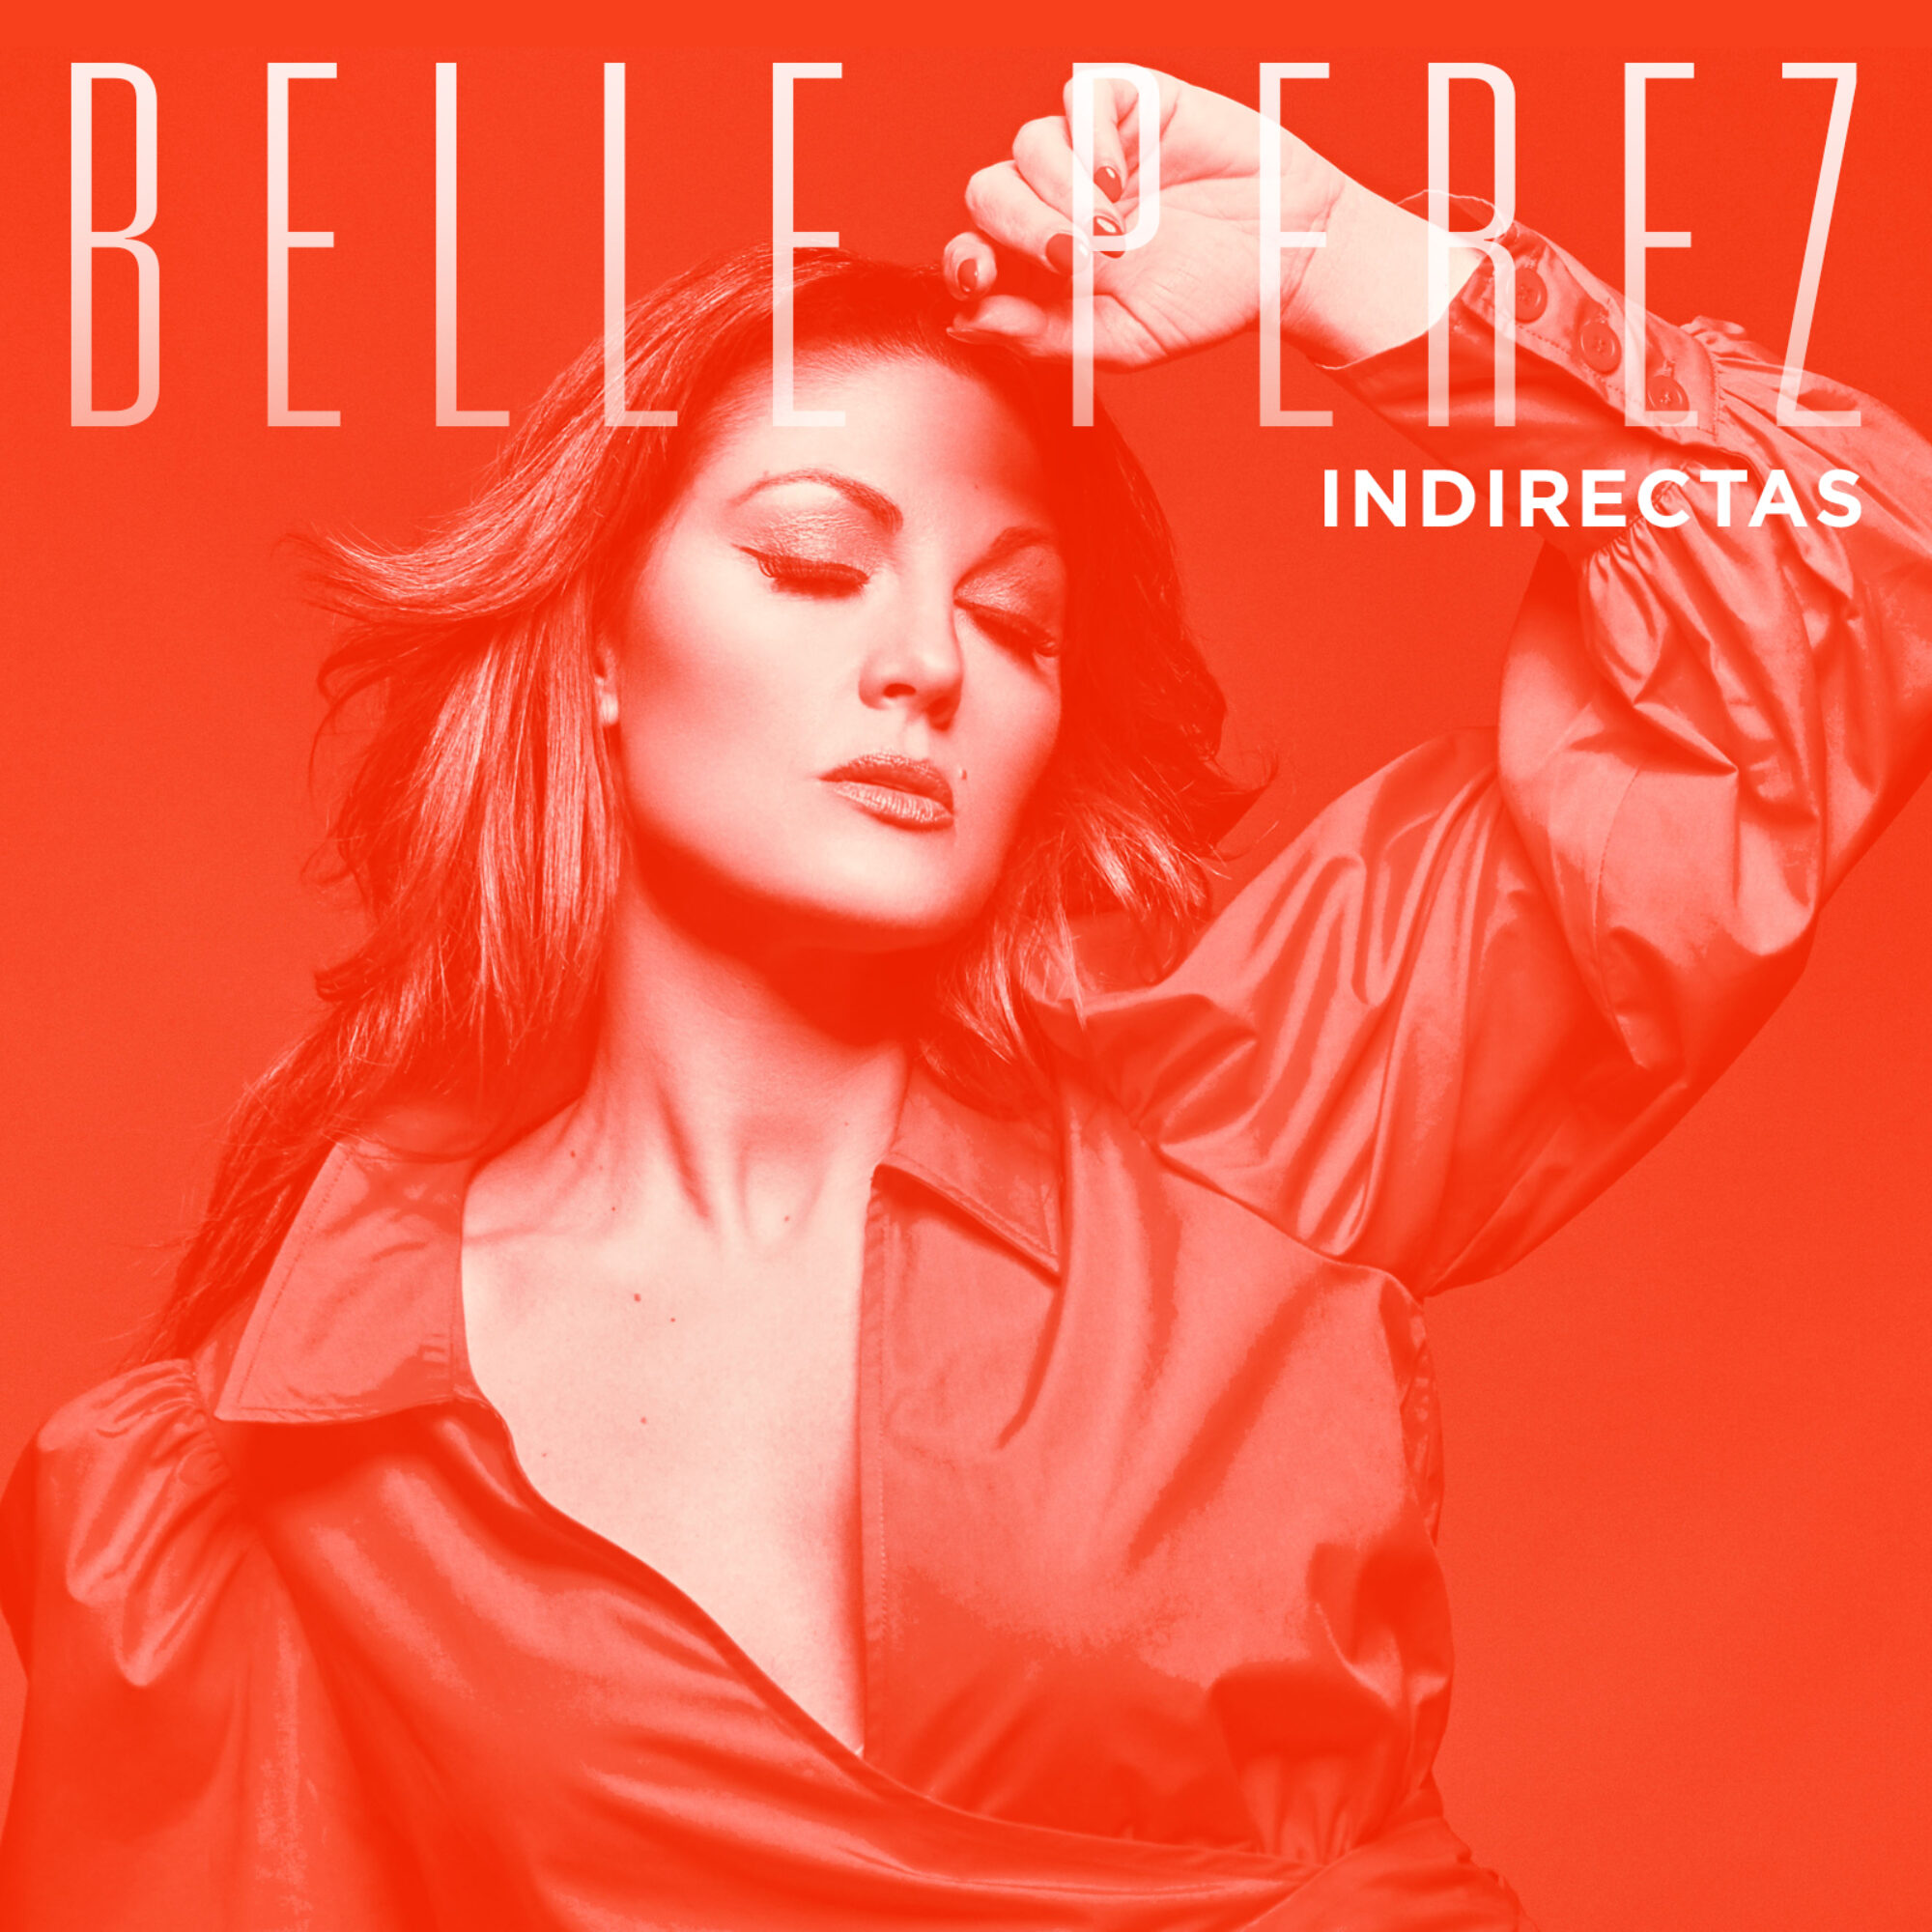 Belle Perez Indirectas Co